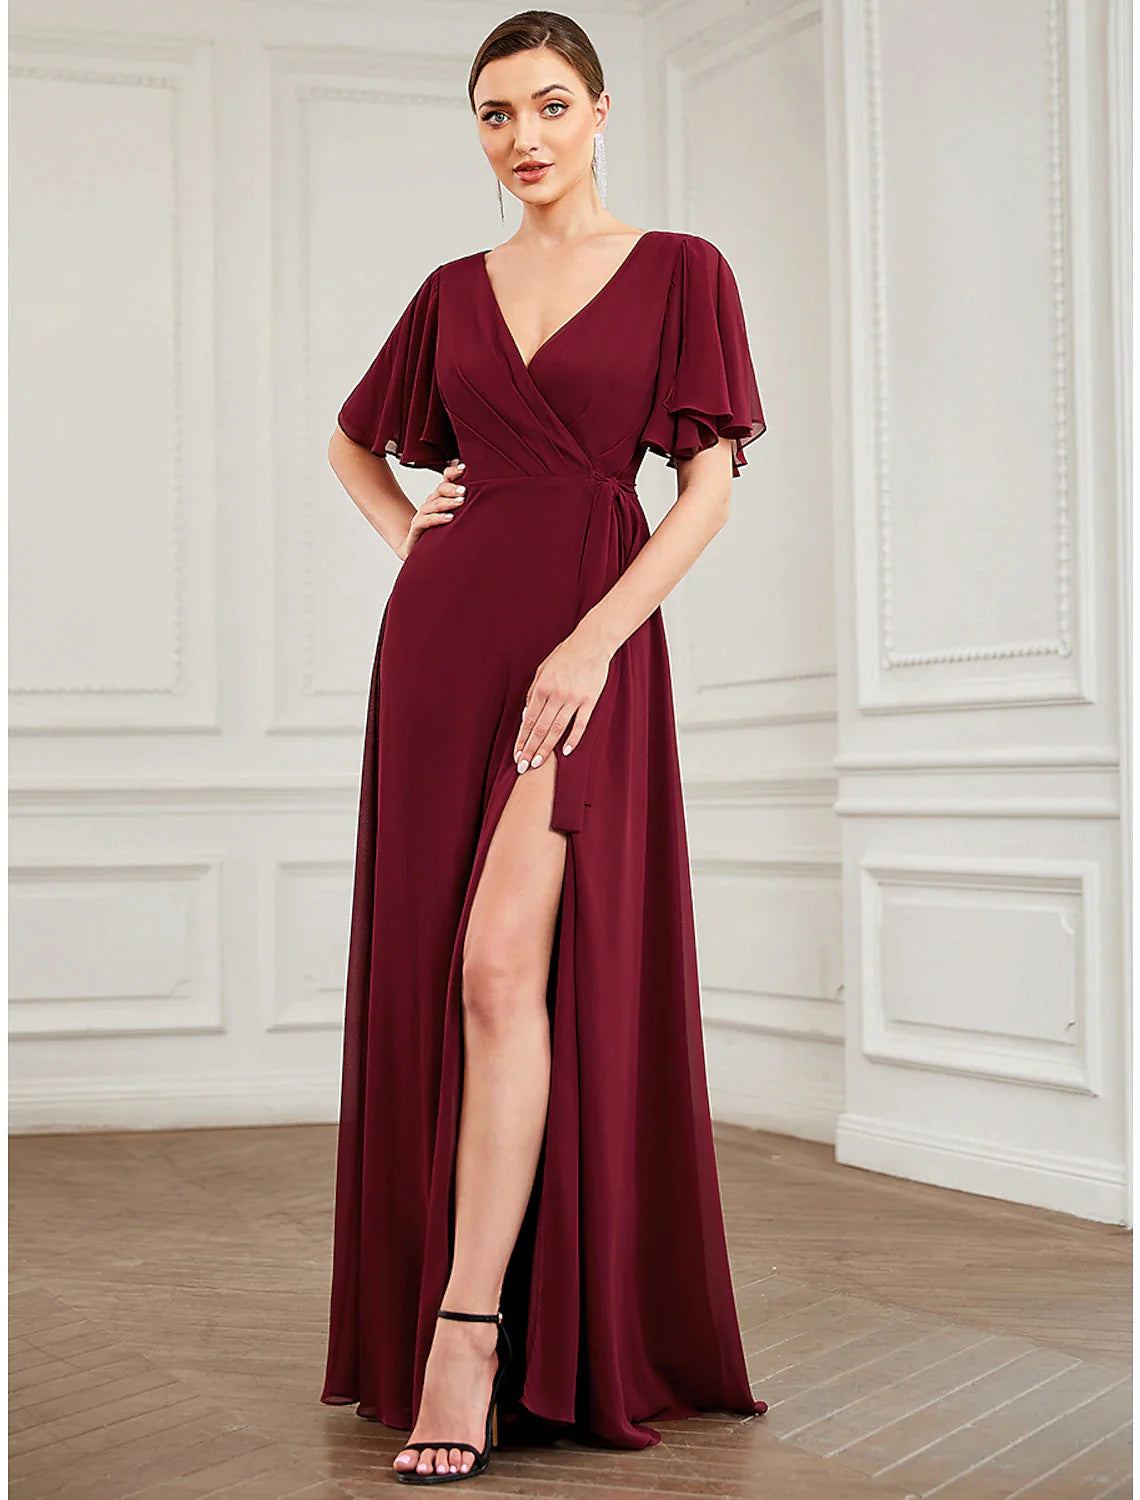 A-Line Bridesmaid Dress V Neck Short Sleeve Elegant Floor Length Chiffon with Ruffles / Draping / Bandage